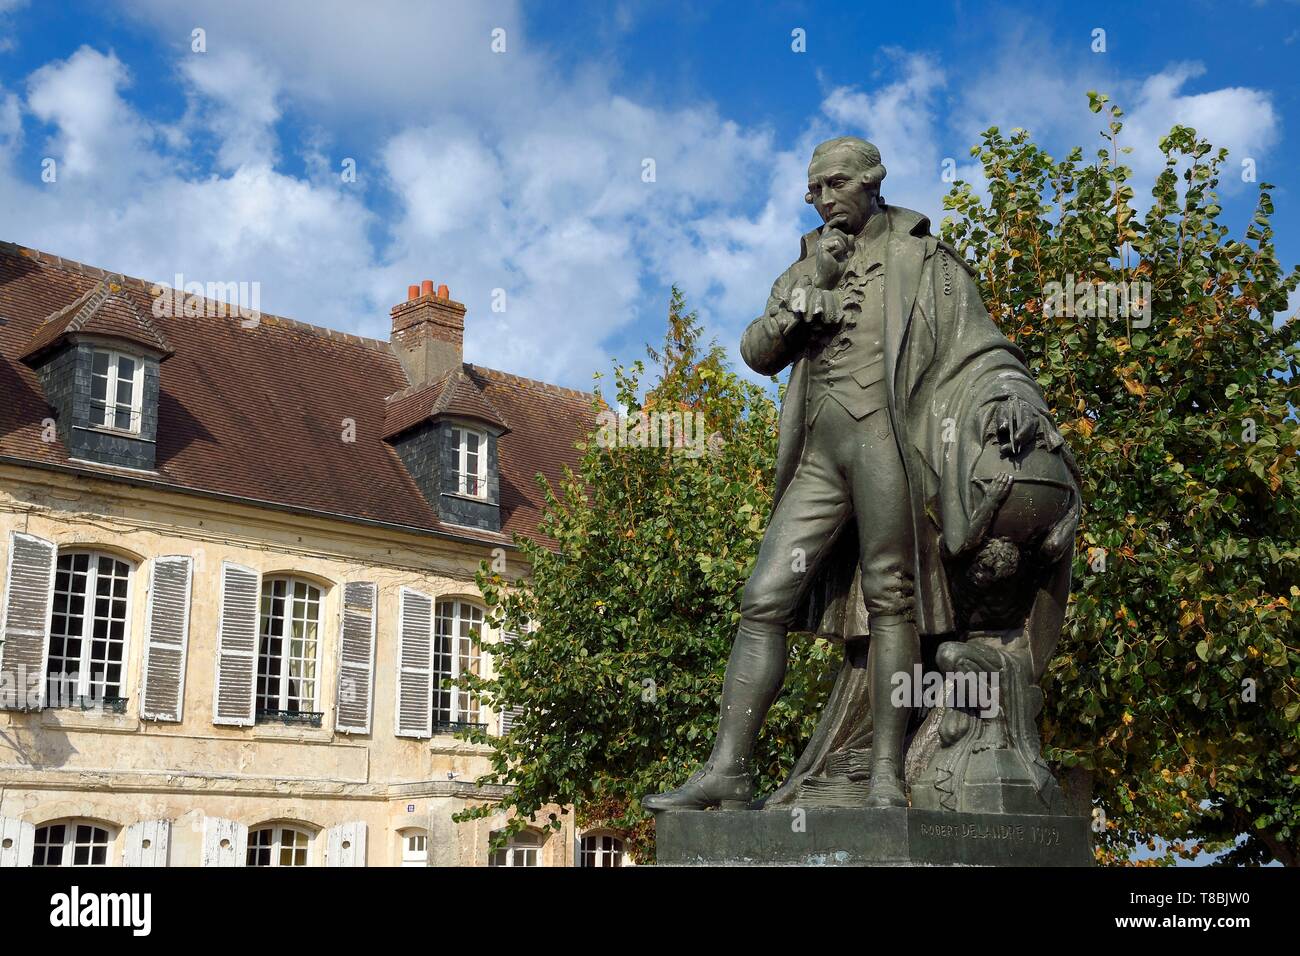 France, Calvados, Pays d'Auge, Beaumont en Auge, statue of Pierre-Simon de Laplace, mathematician, astronomer, physicist and French politician Stock Photo